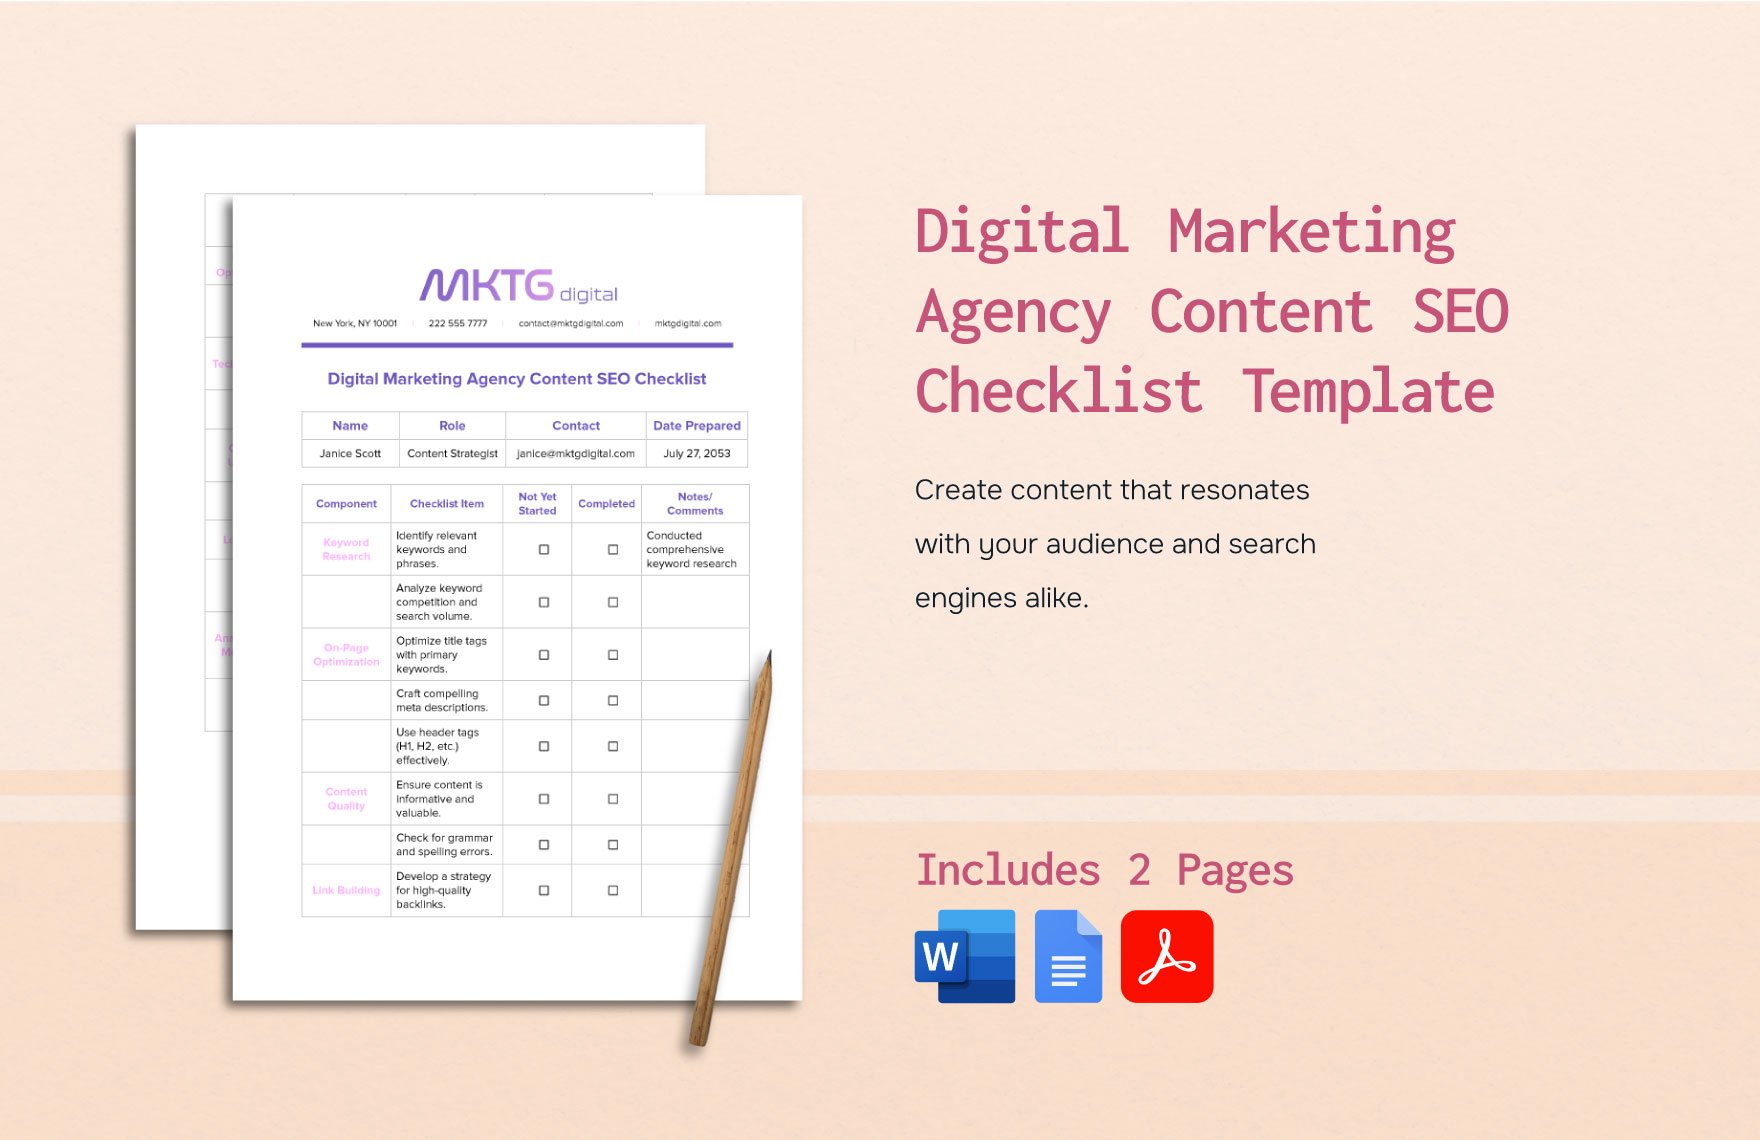 Digital Marketing Agency Content SEO Checklist Template in Word, Google Docs, PDF